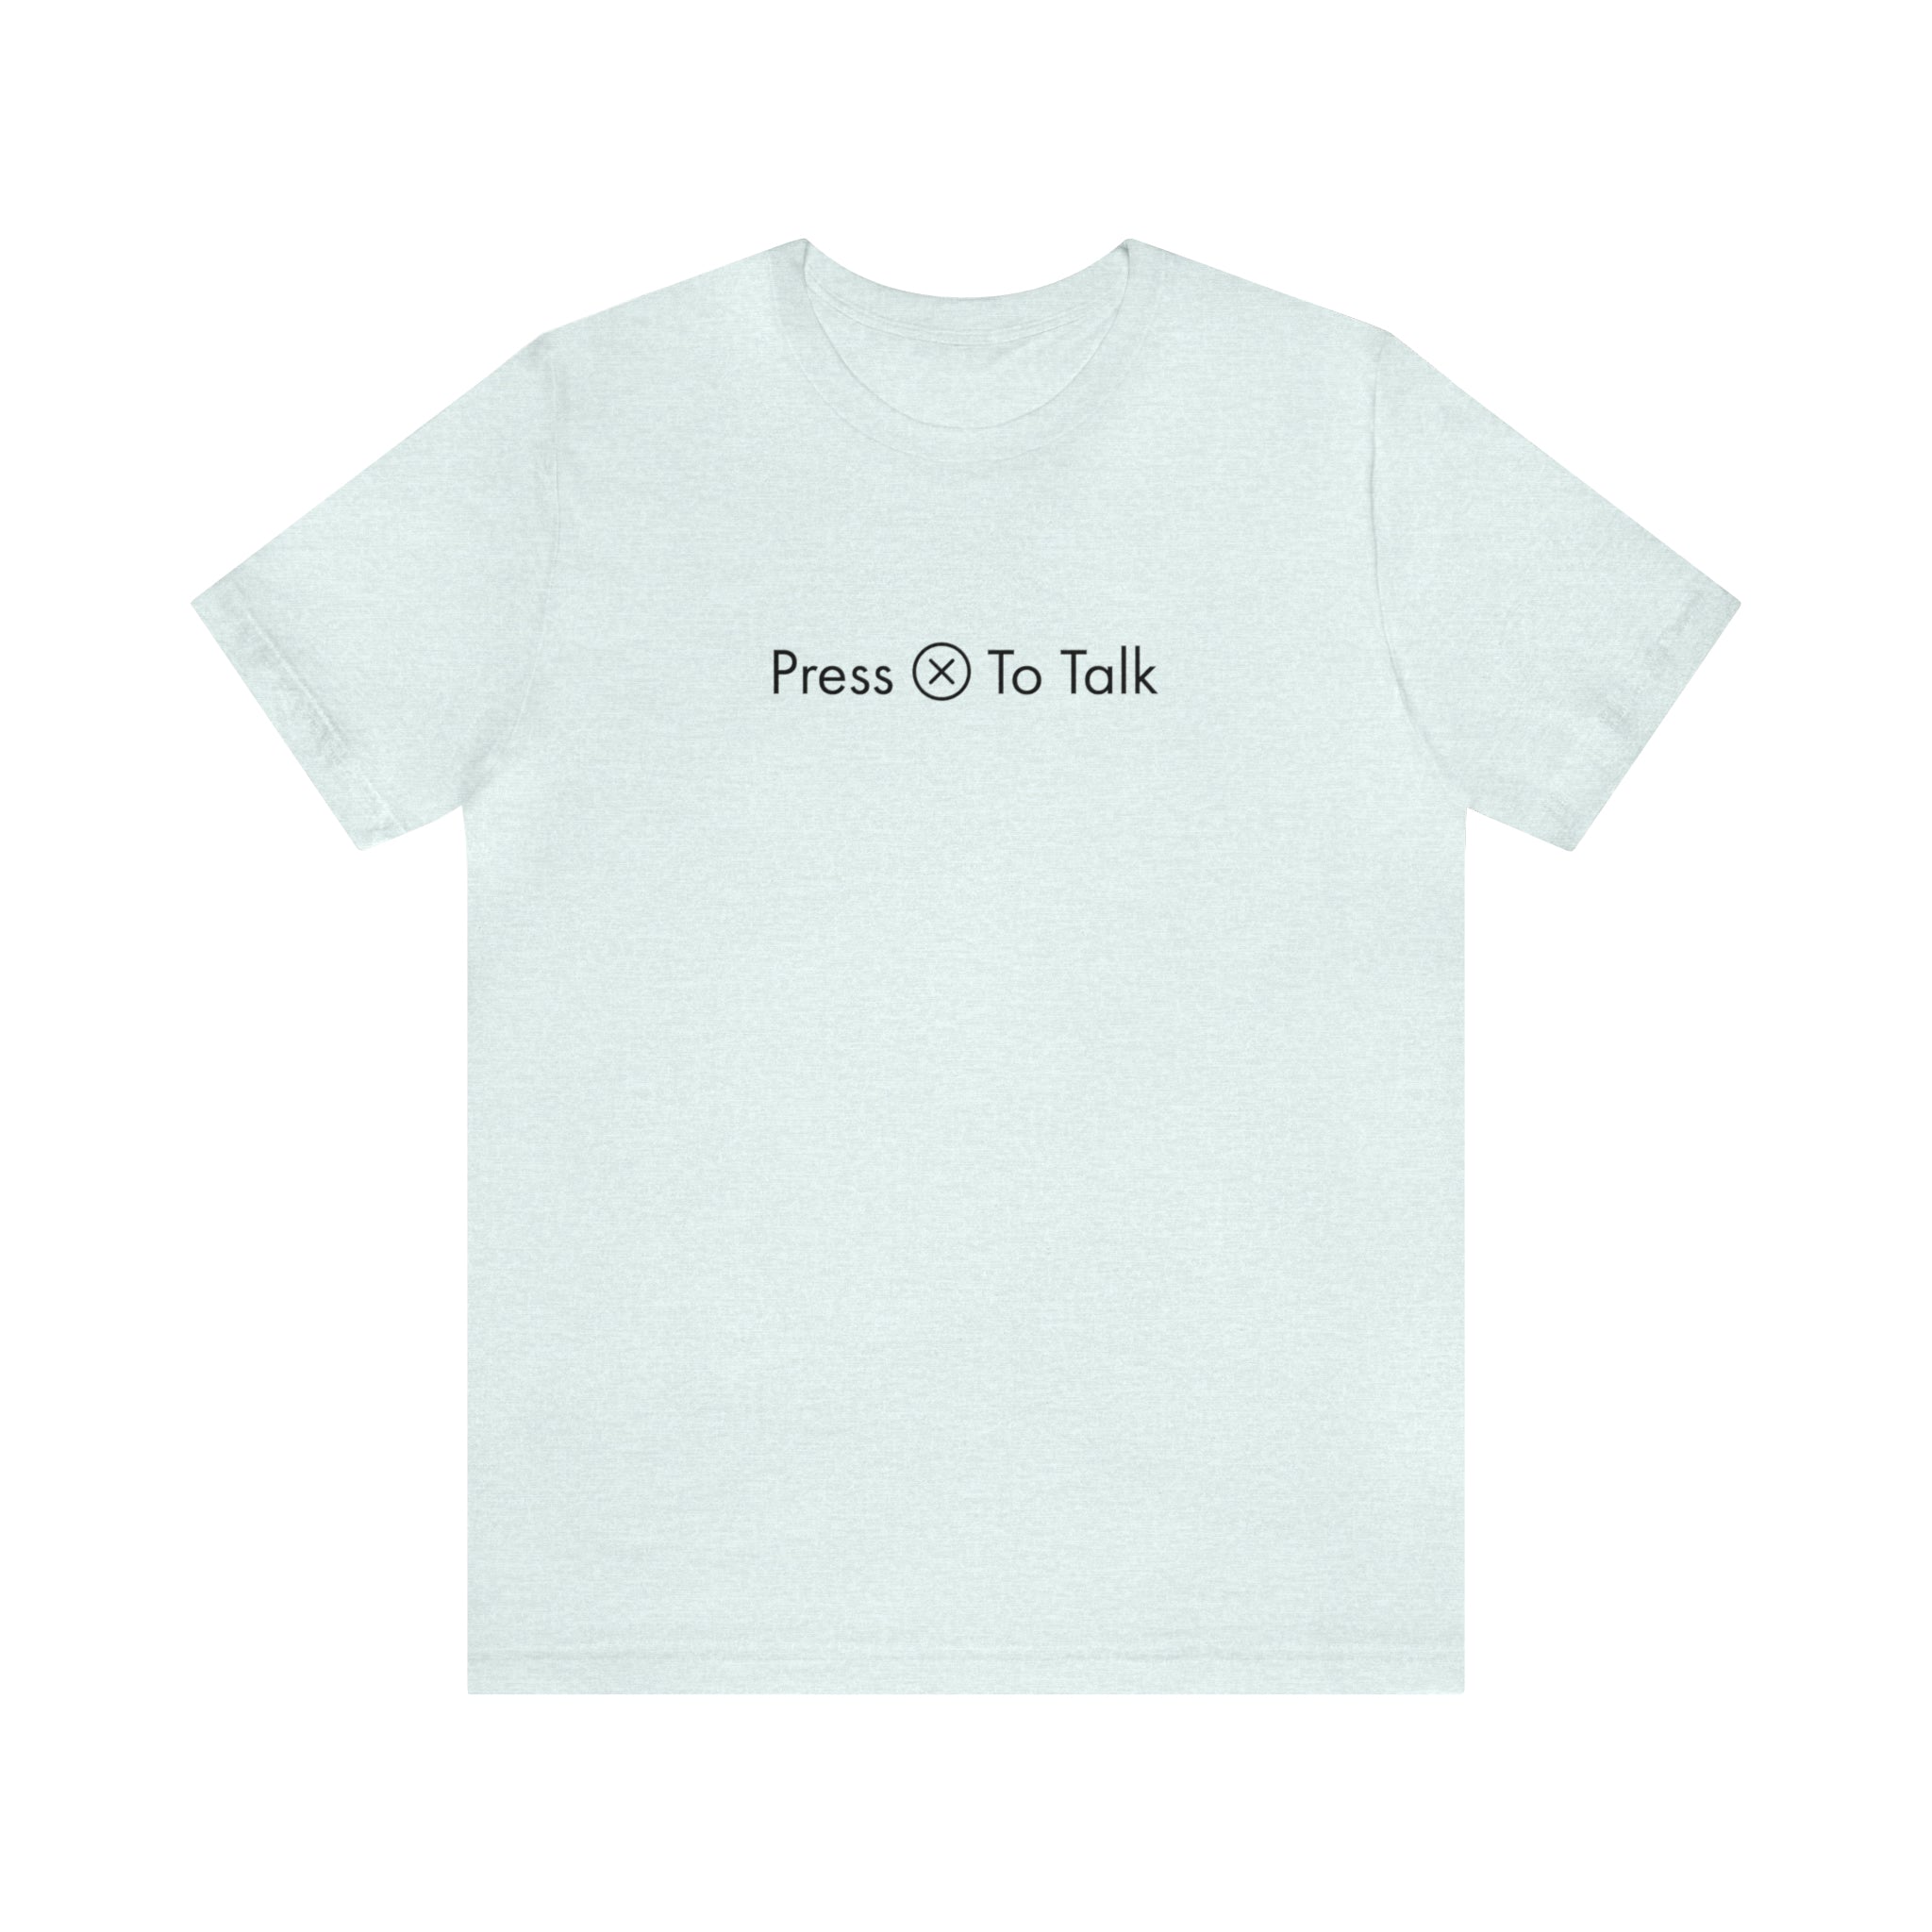 Press X To Talk T-Shirt |  Gift for Gamers, Gamer Shirt, Nerdy Gifts, Video Gamer T-Shirt